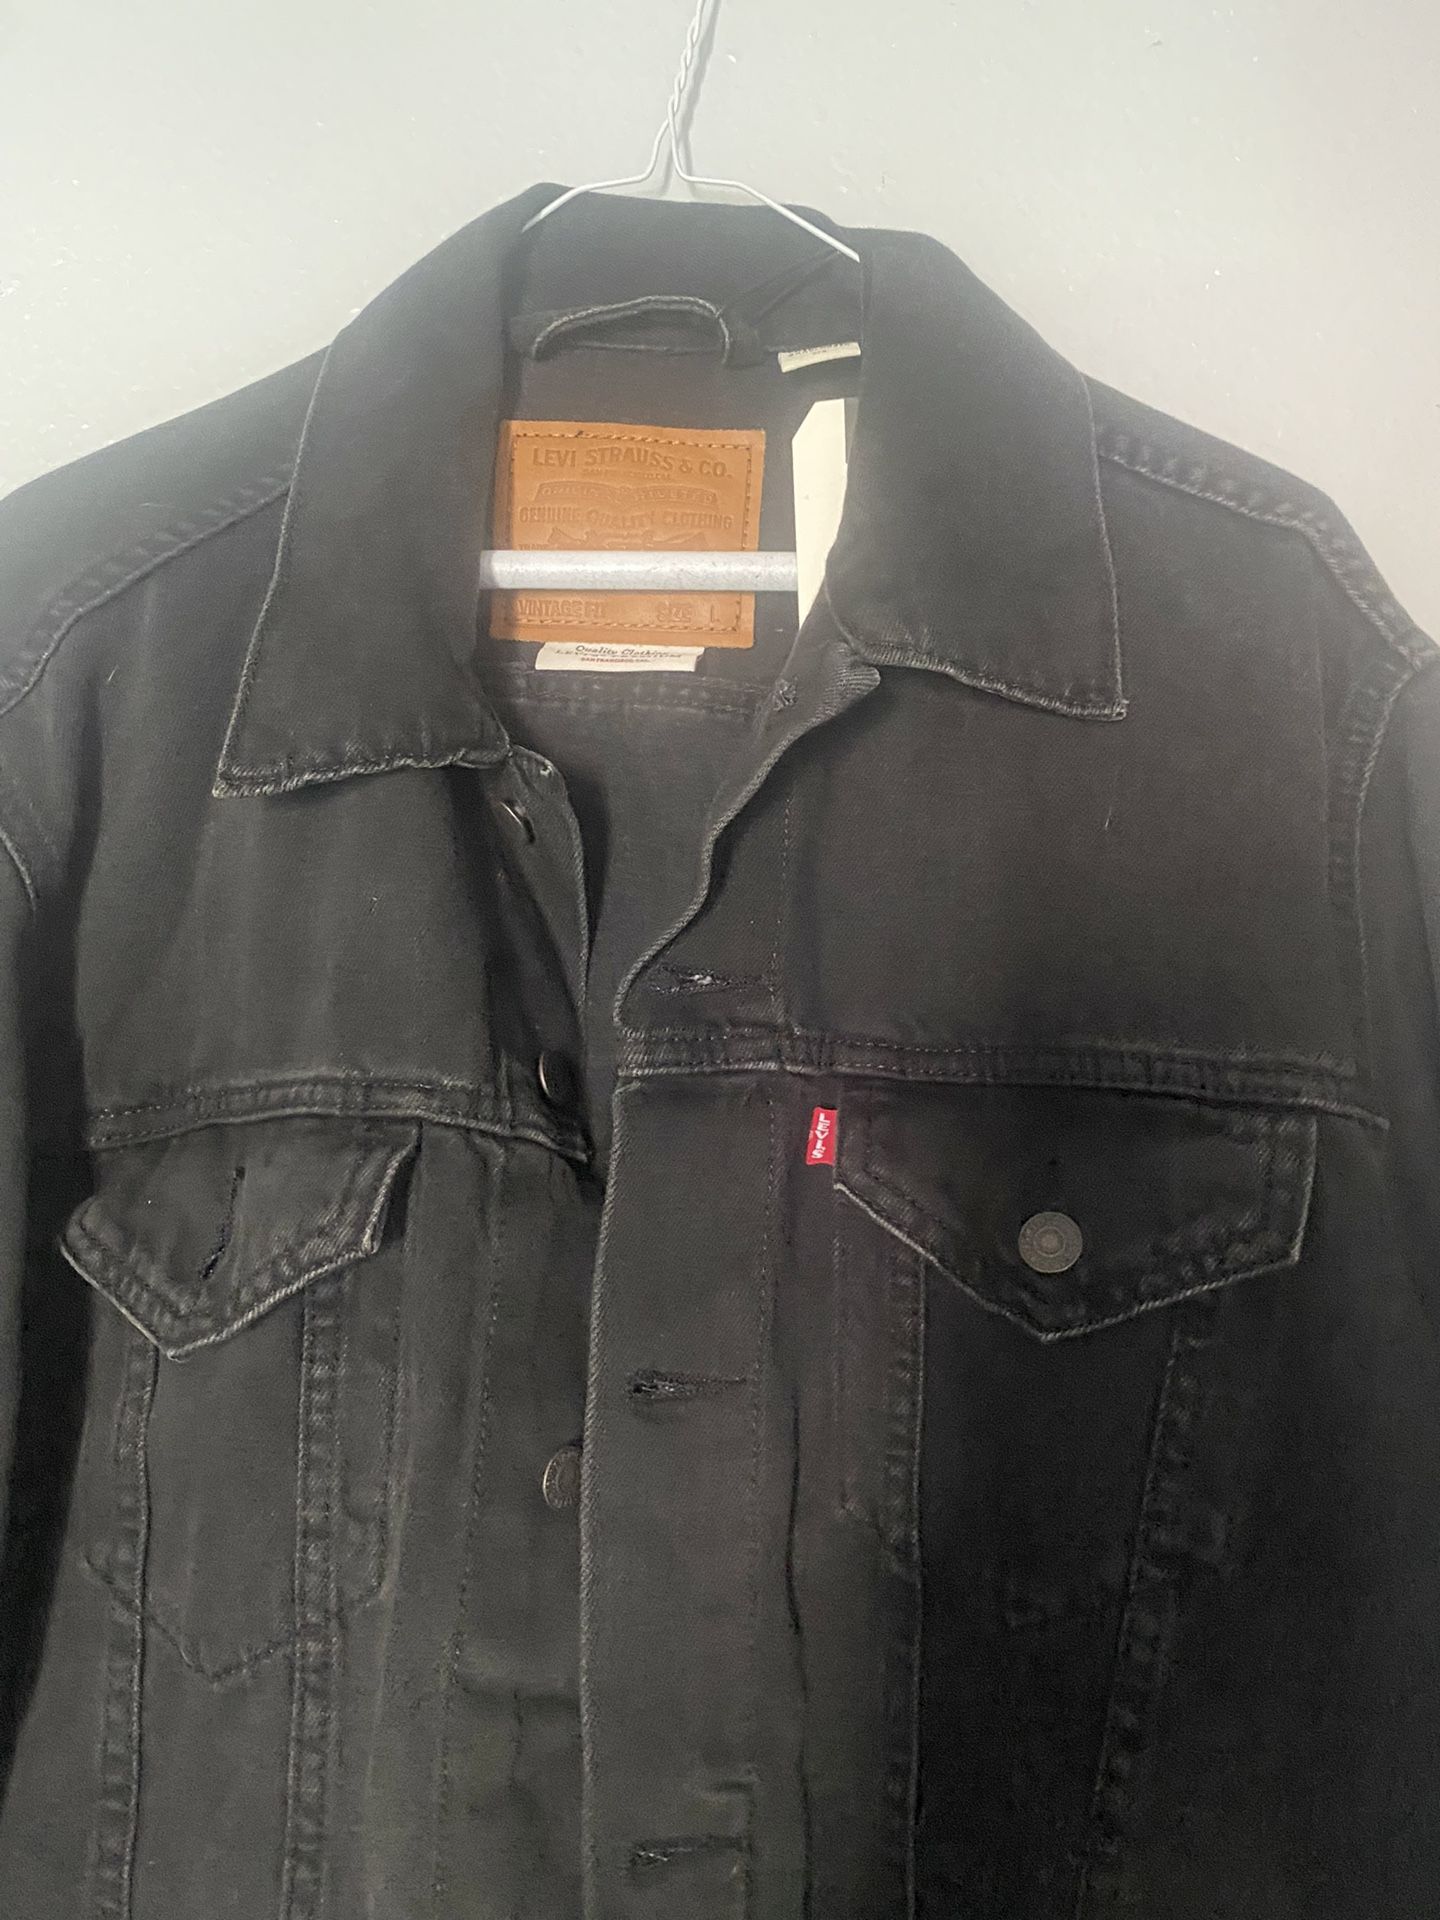 Levi Demin Jacket For Men Size Large Brand New 